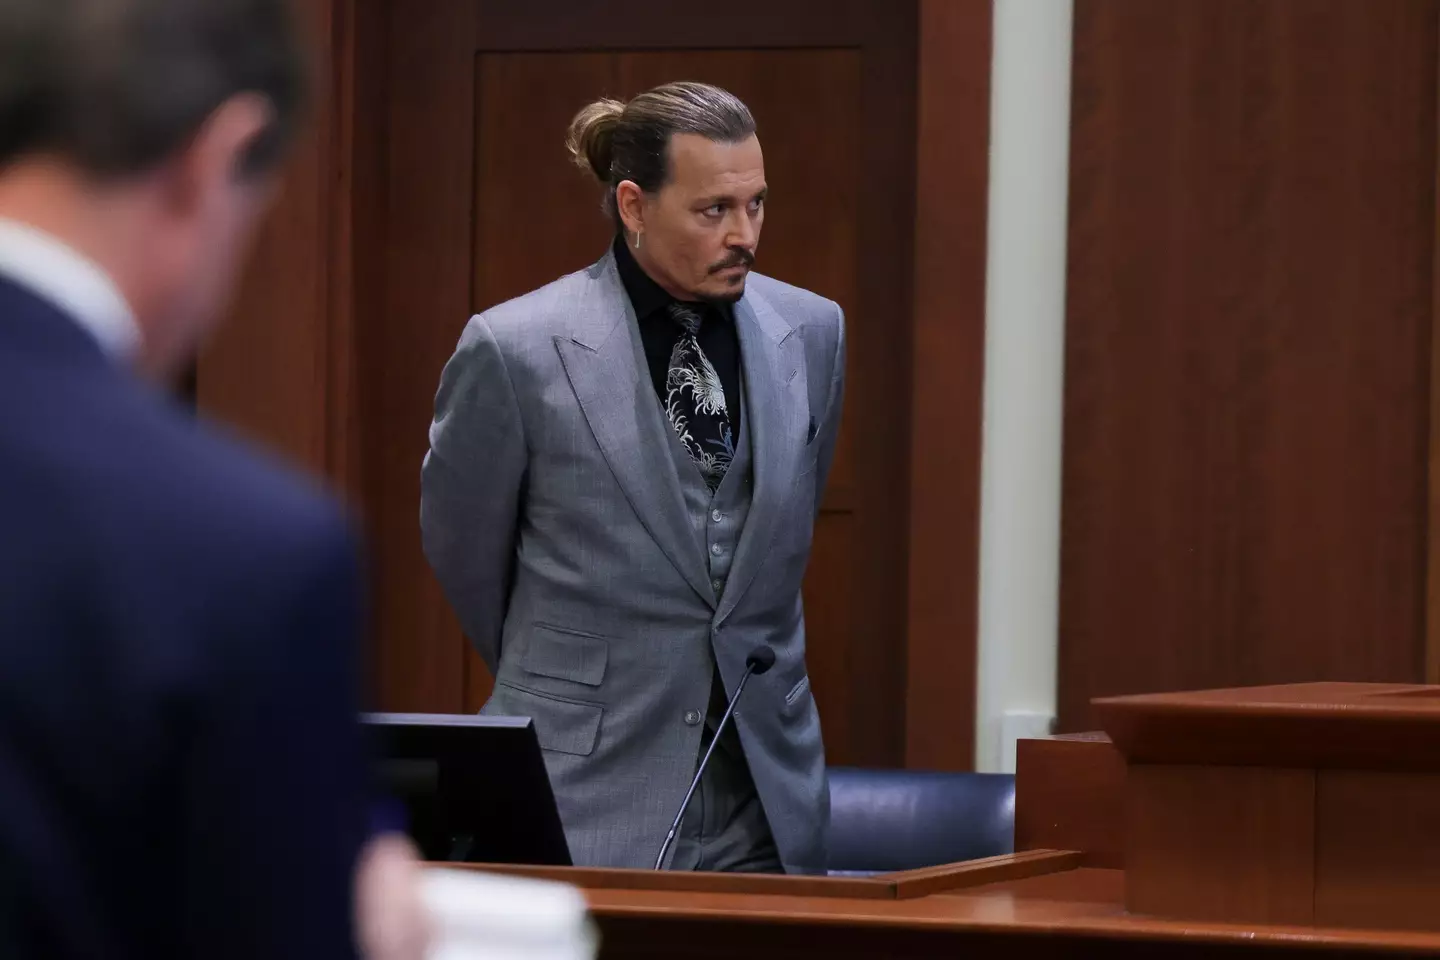 Johnny Depp won his defamation trial against Amber Heard.